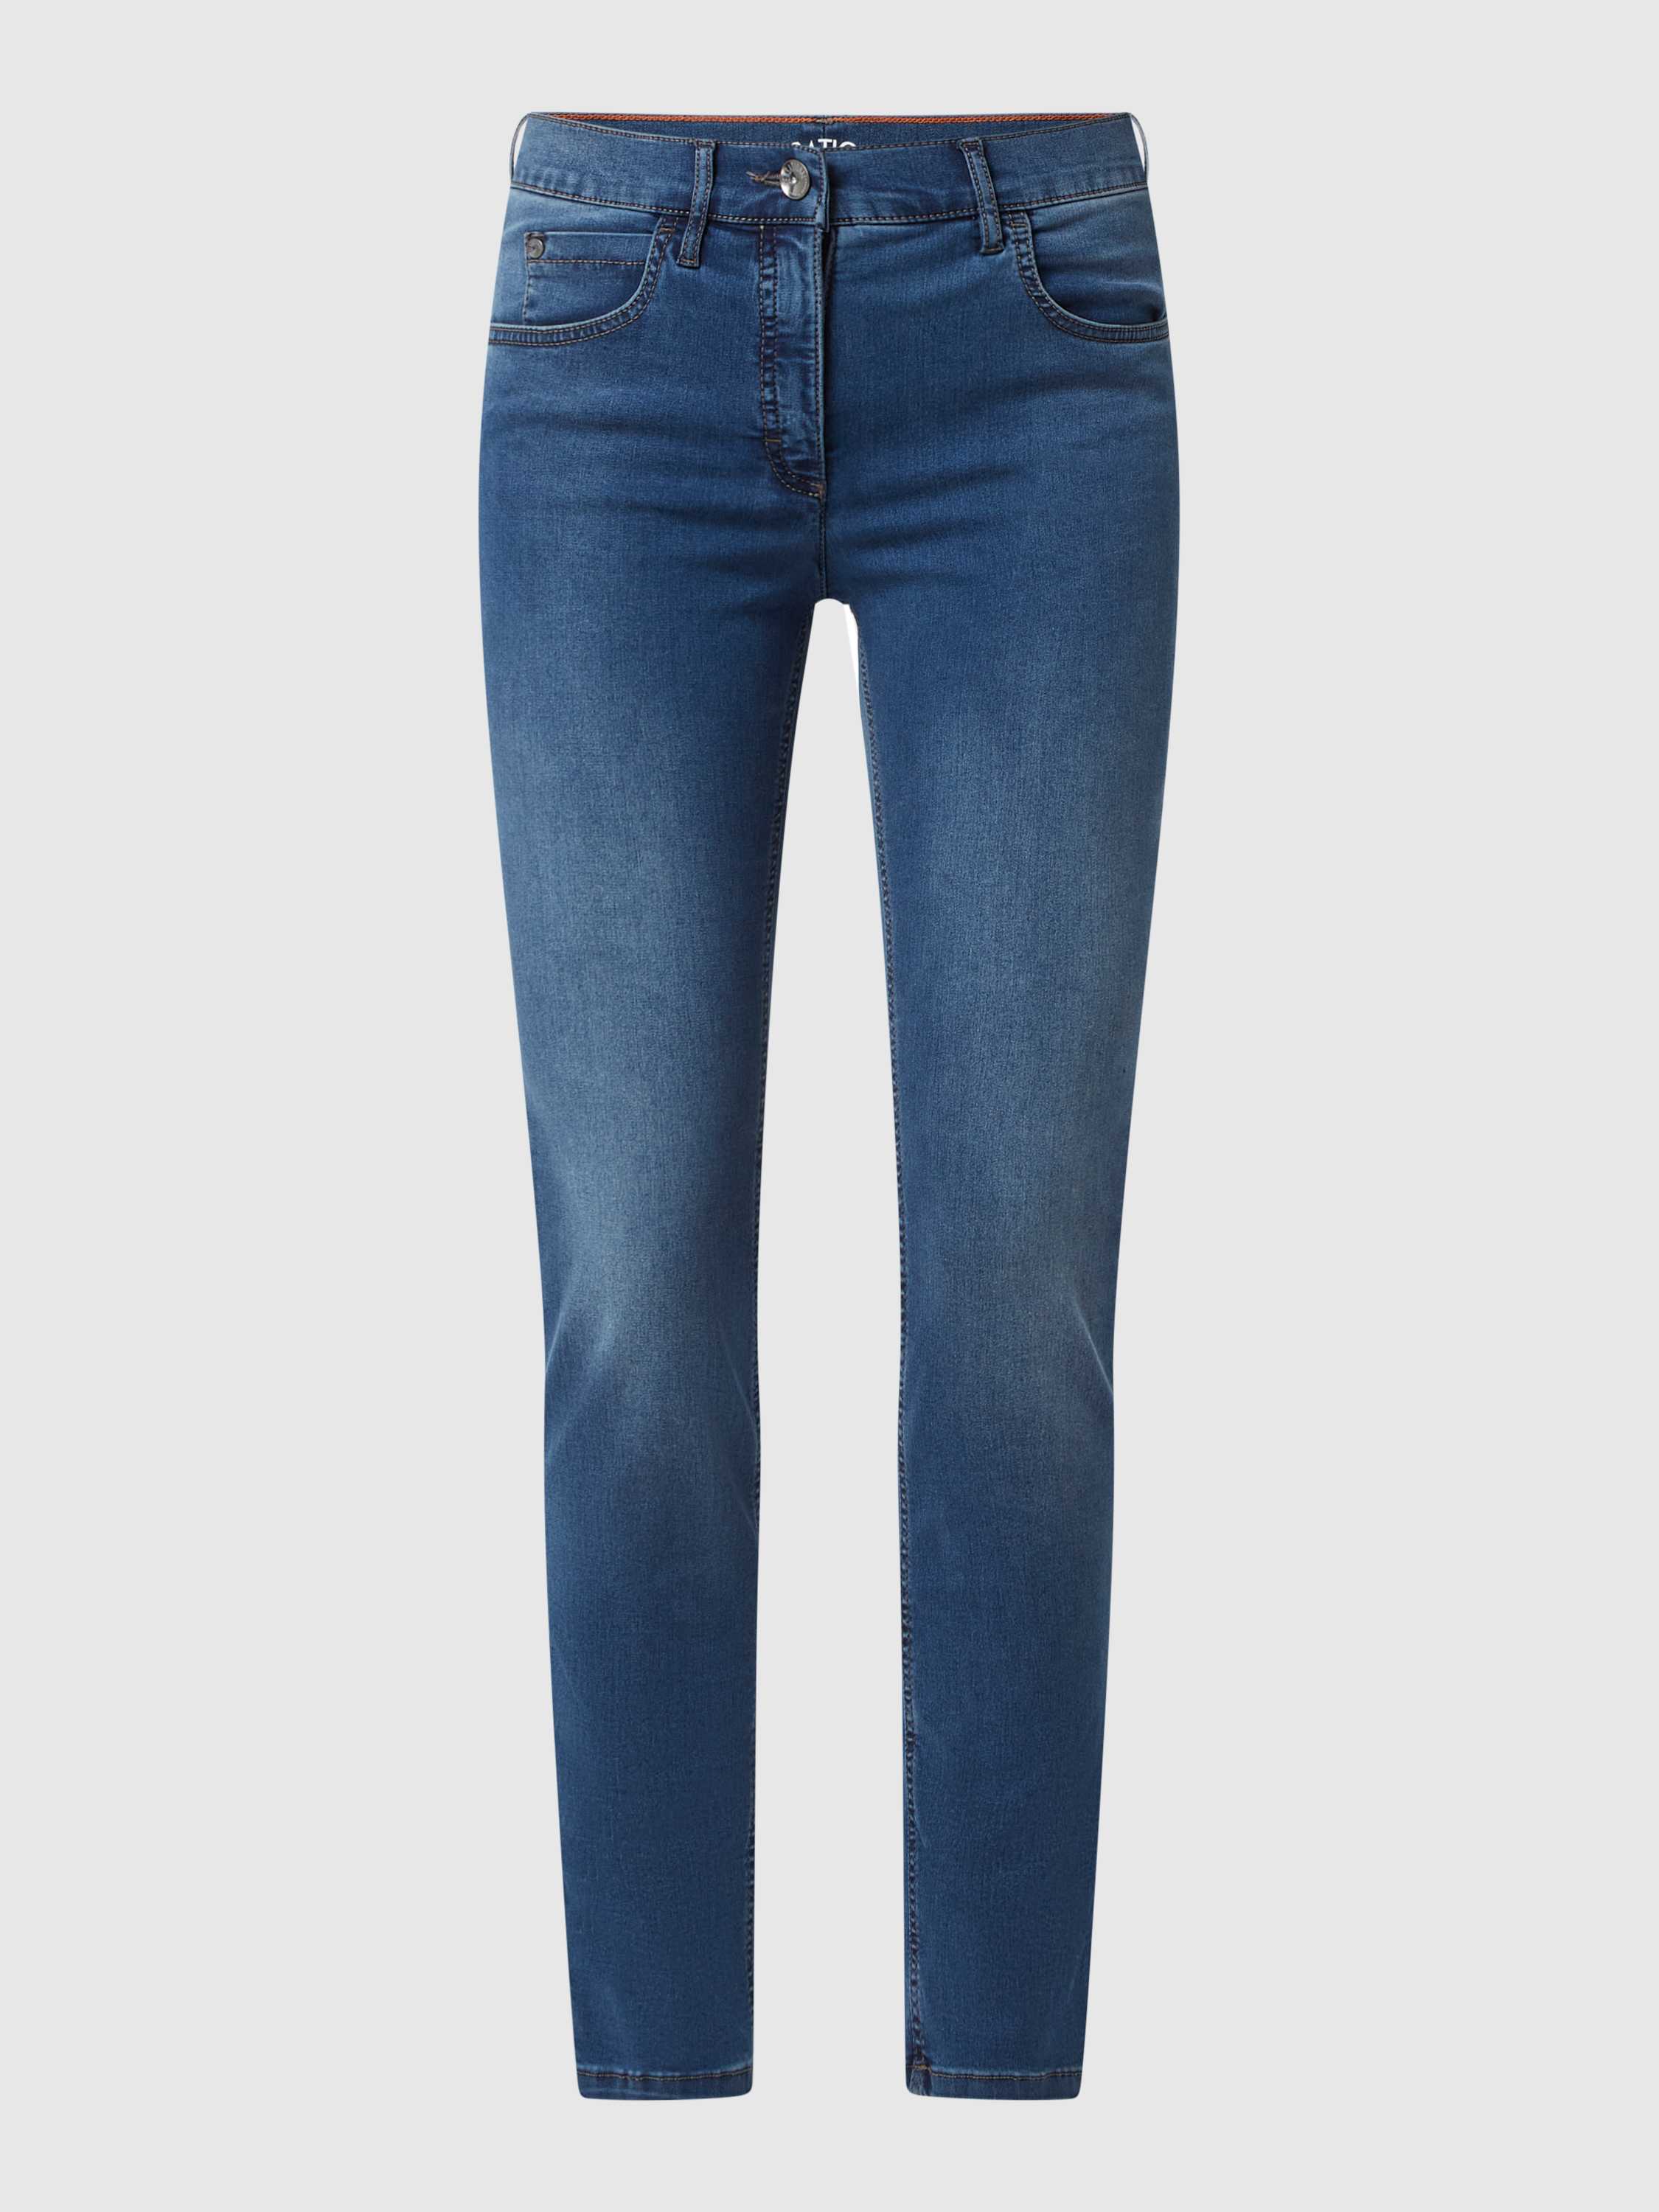 Jeans mit Stretch-Anteil Modell 'Twigy', Peek & Cloppenburg